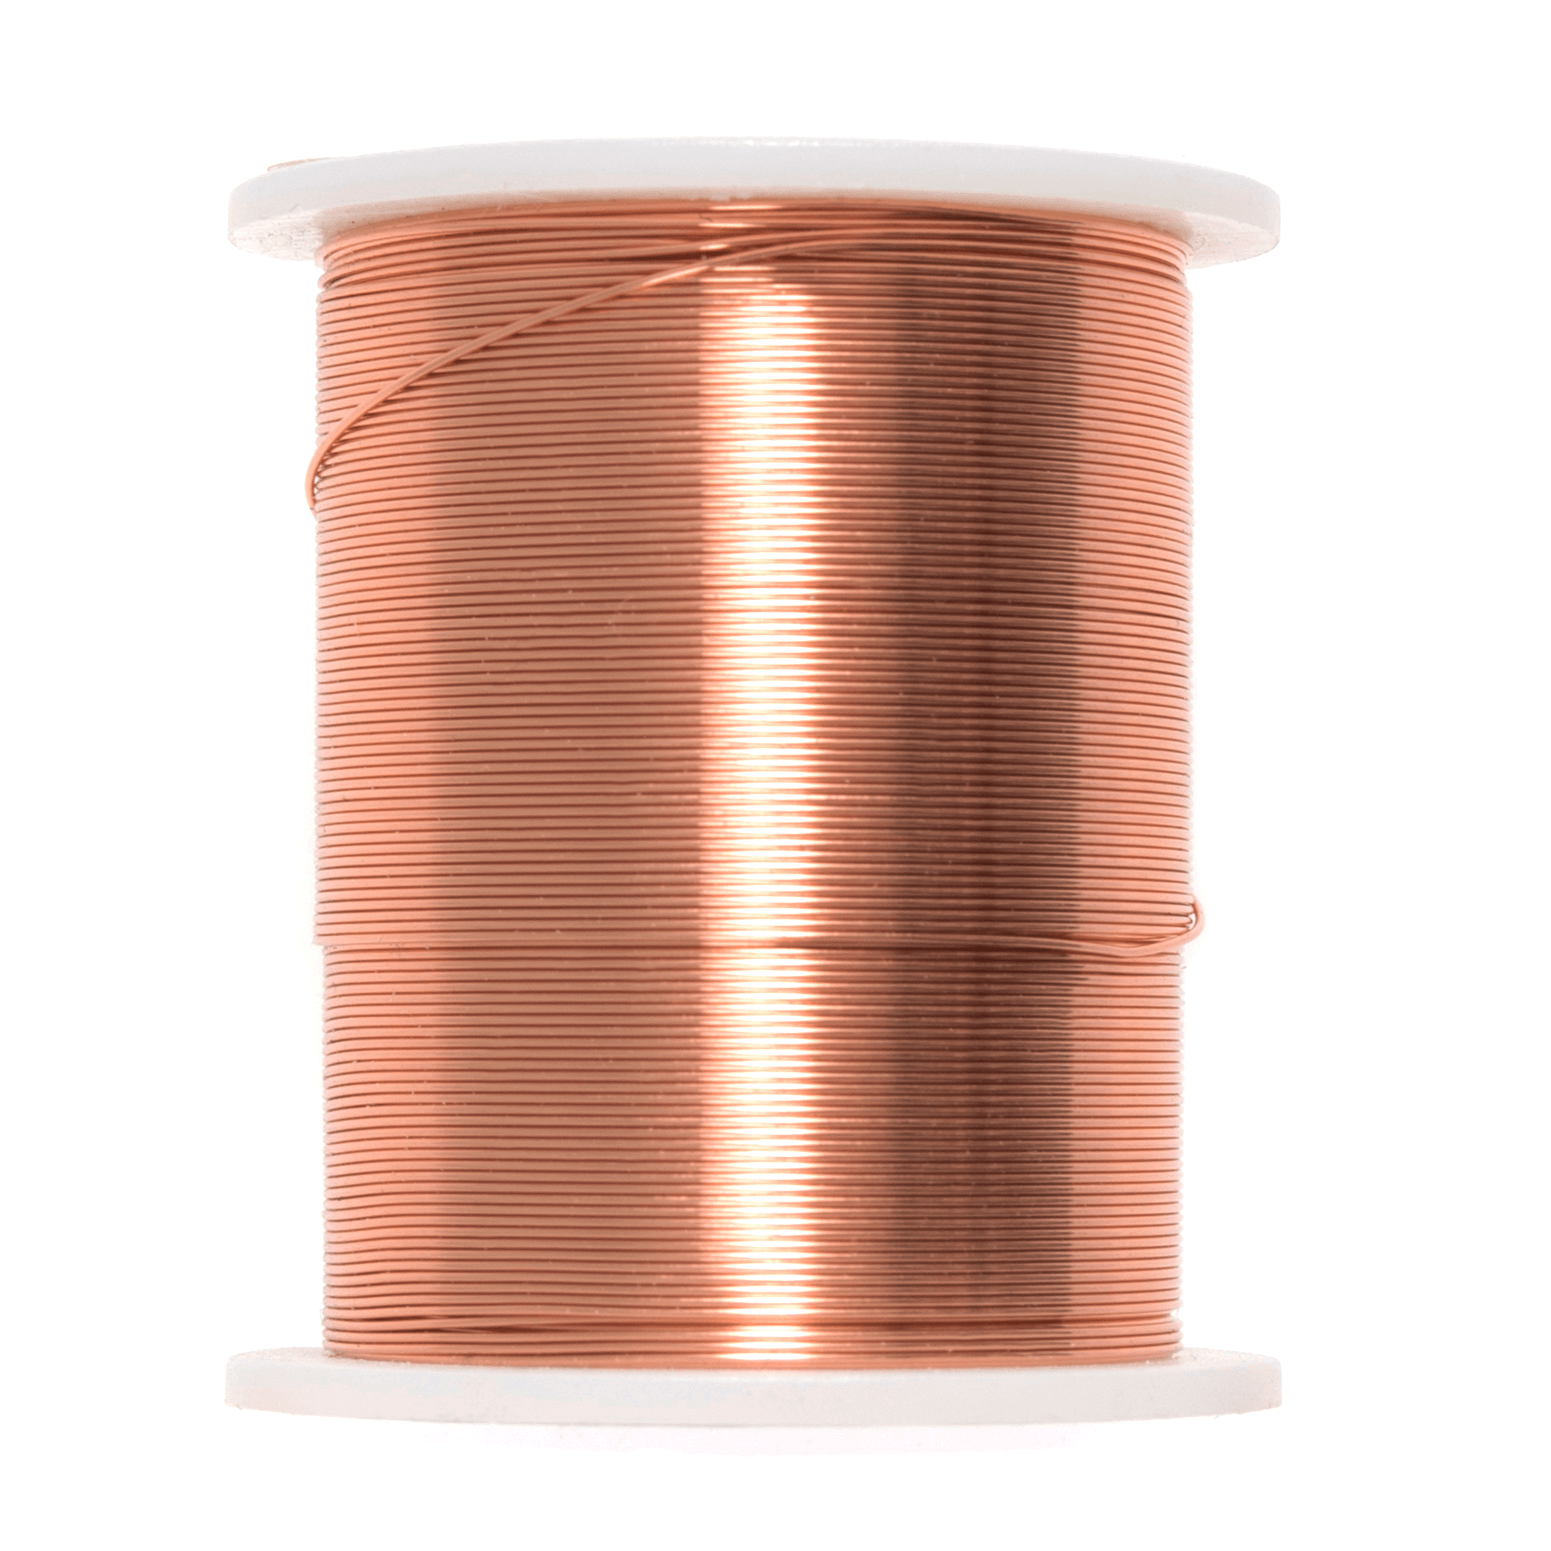 Trimits 28 Gauge Copper Beading Wire - 20m